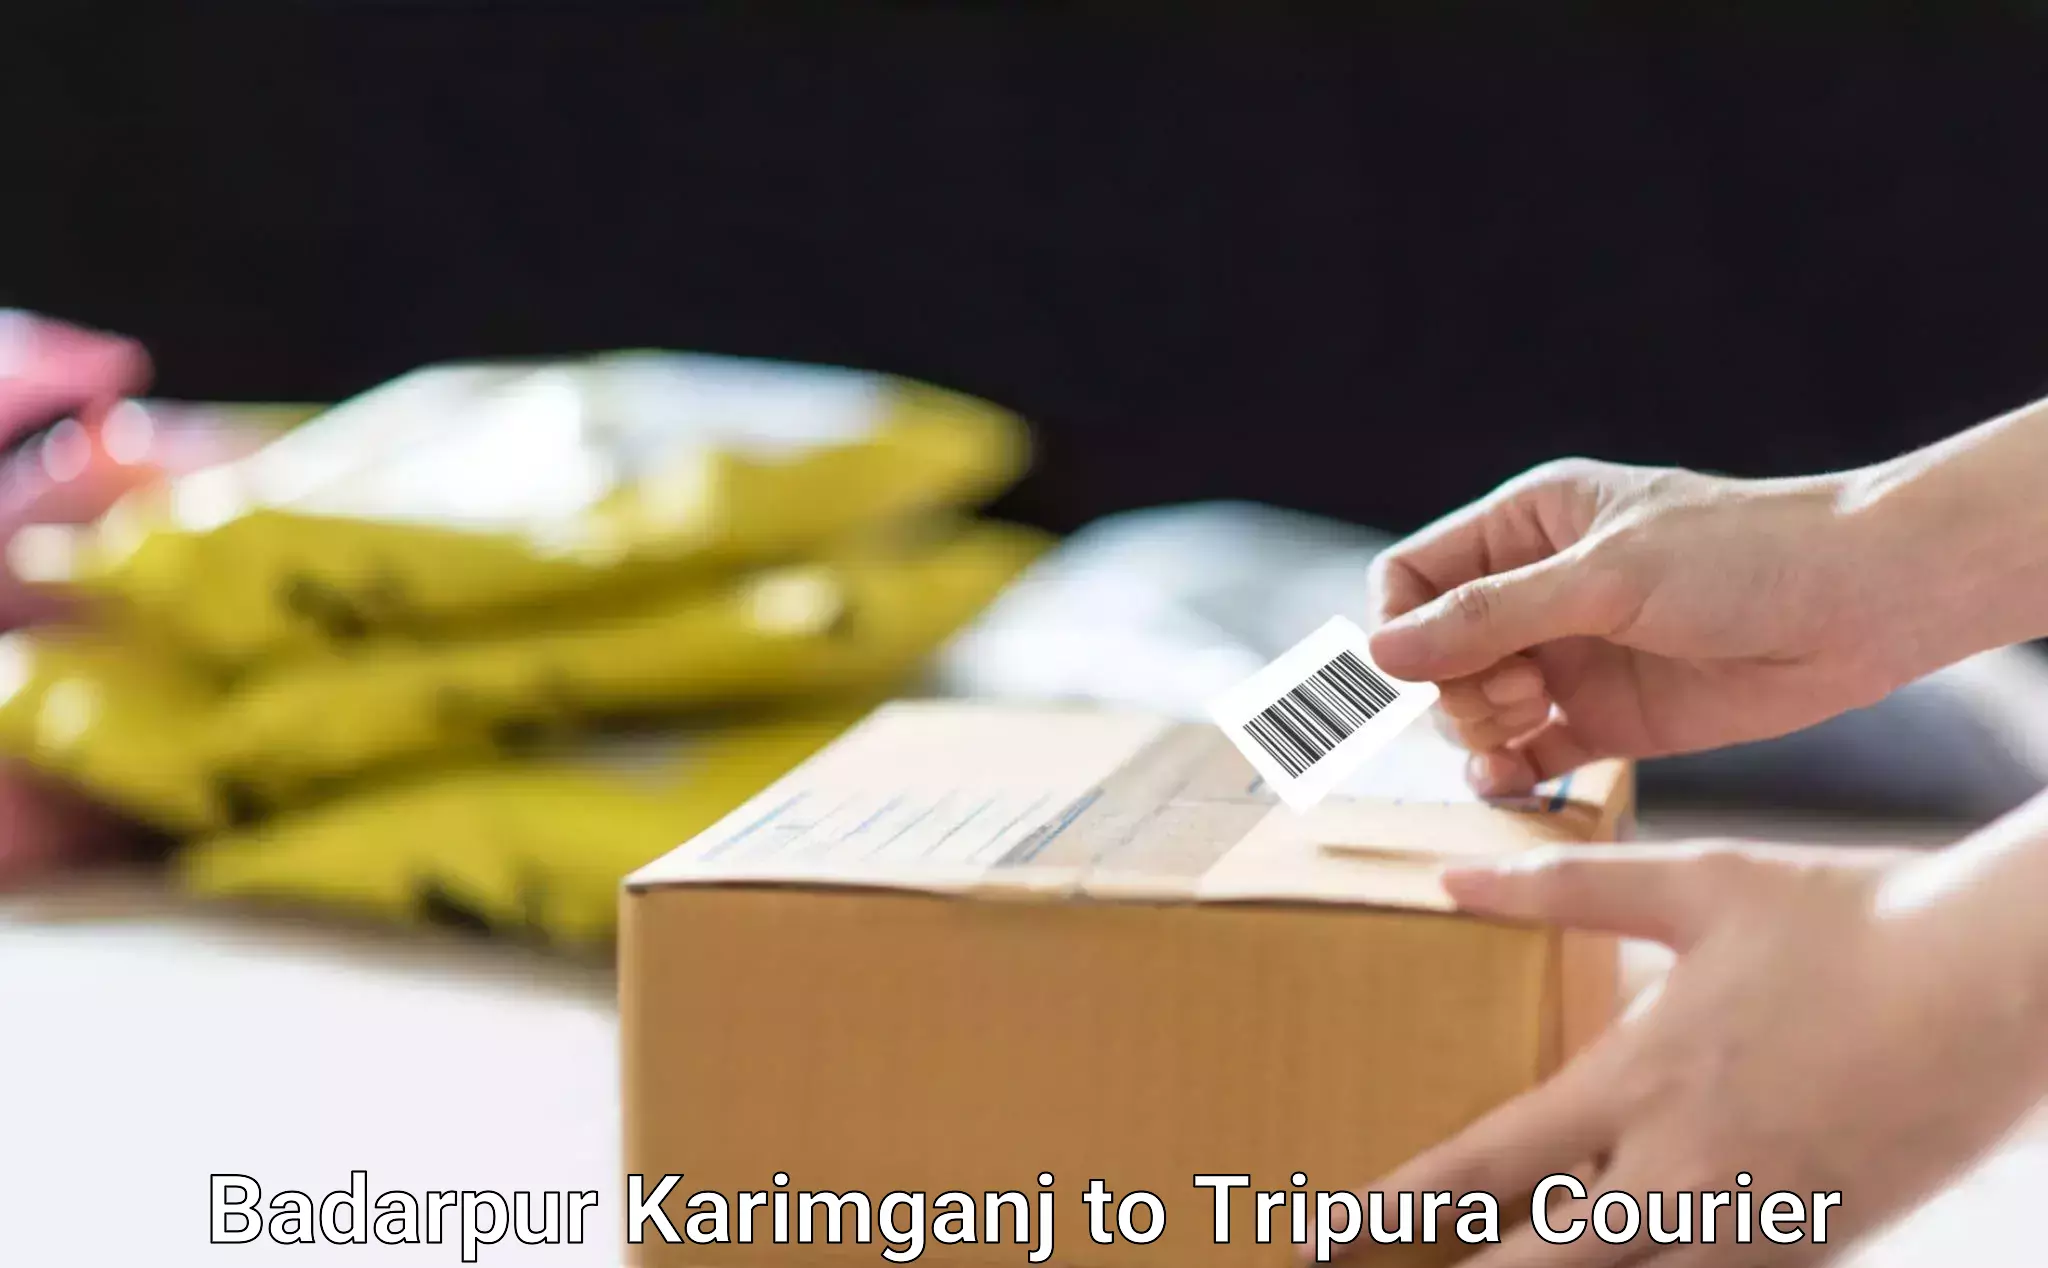 Multi-service courier options Badarpur Karimganj to Udaipur Tripura